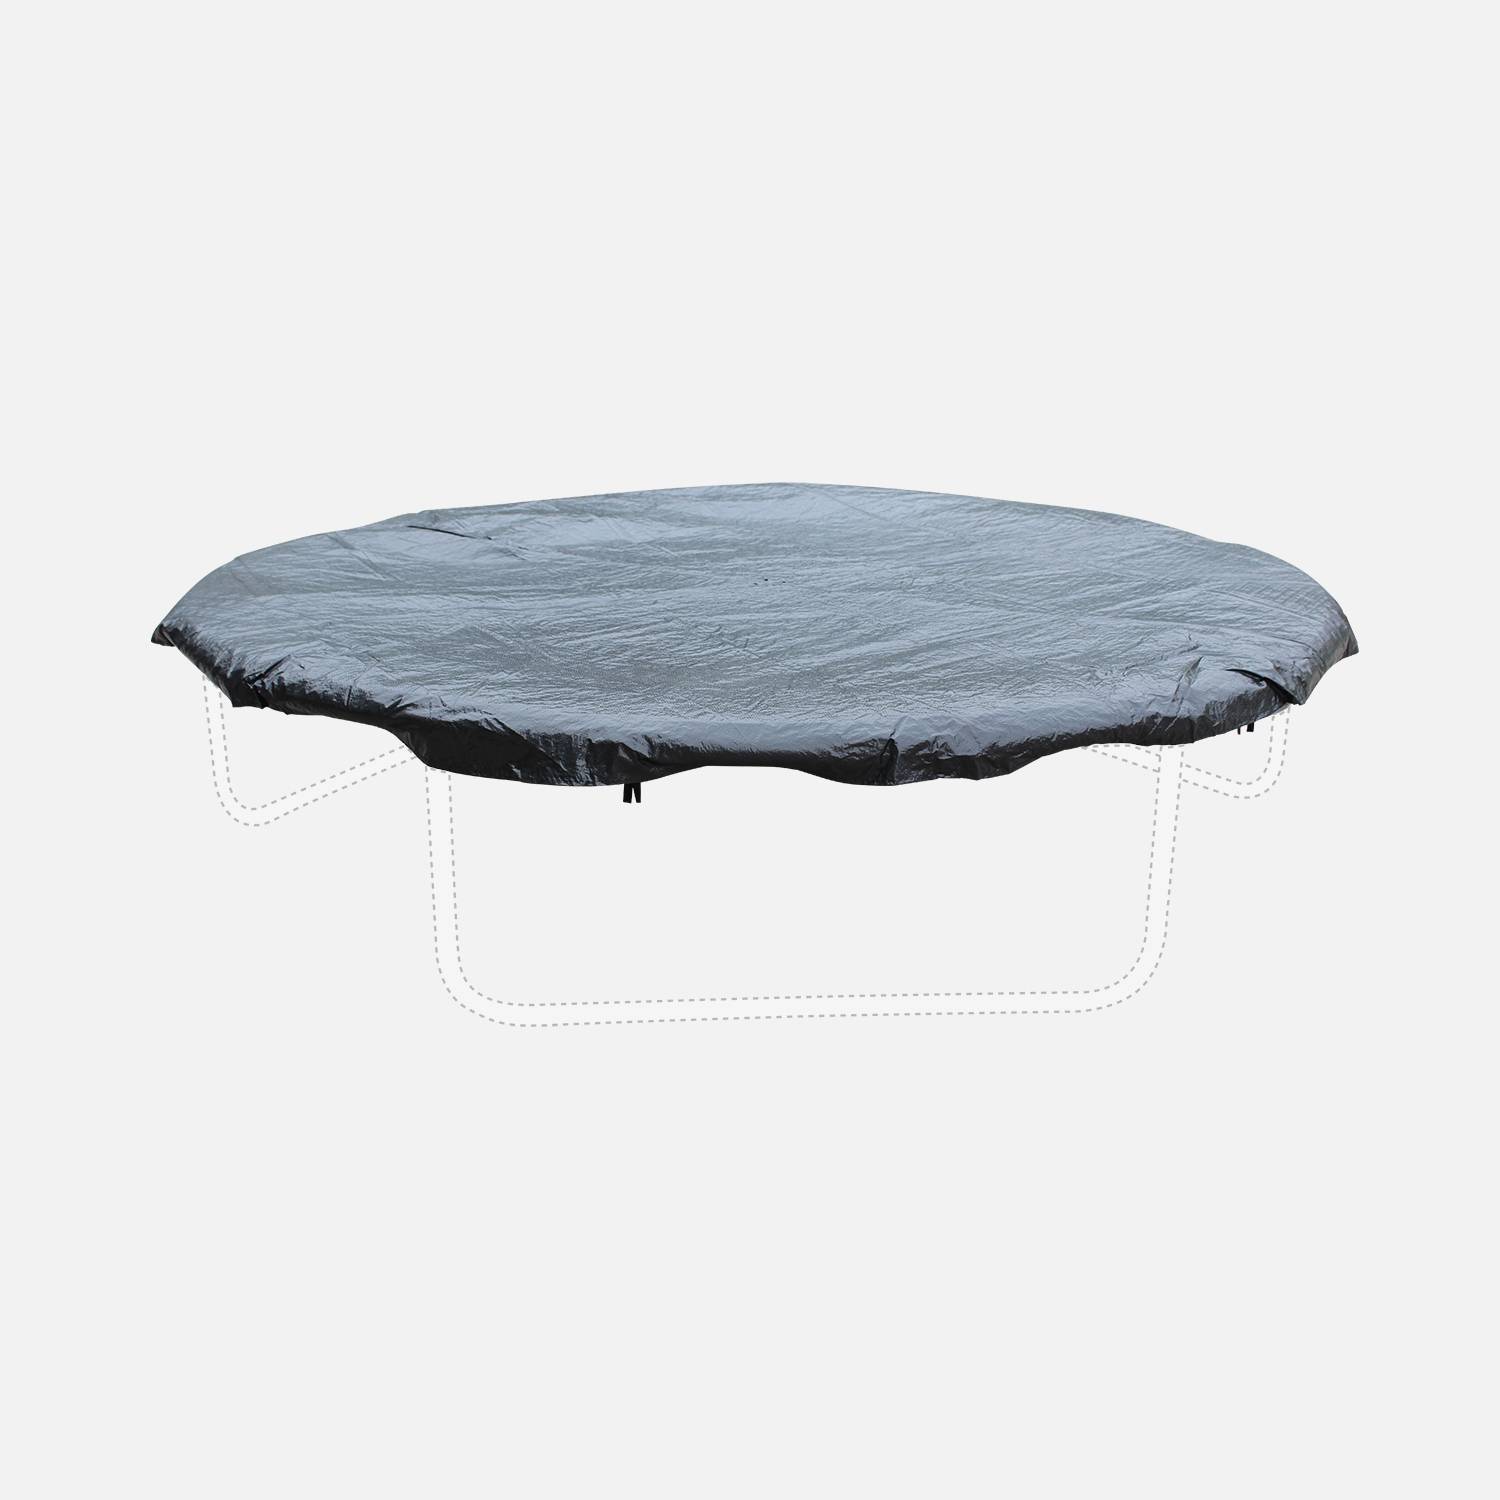 Fodera di protezione per trampolino 305CM - adattabile a tutti i marchi di trampolini Photo1